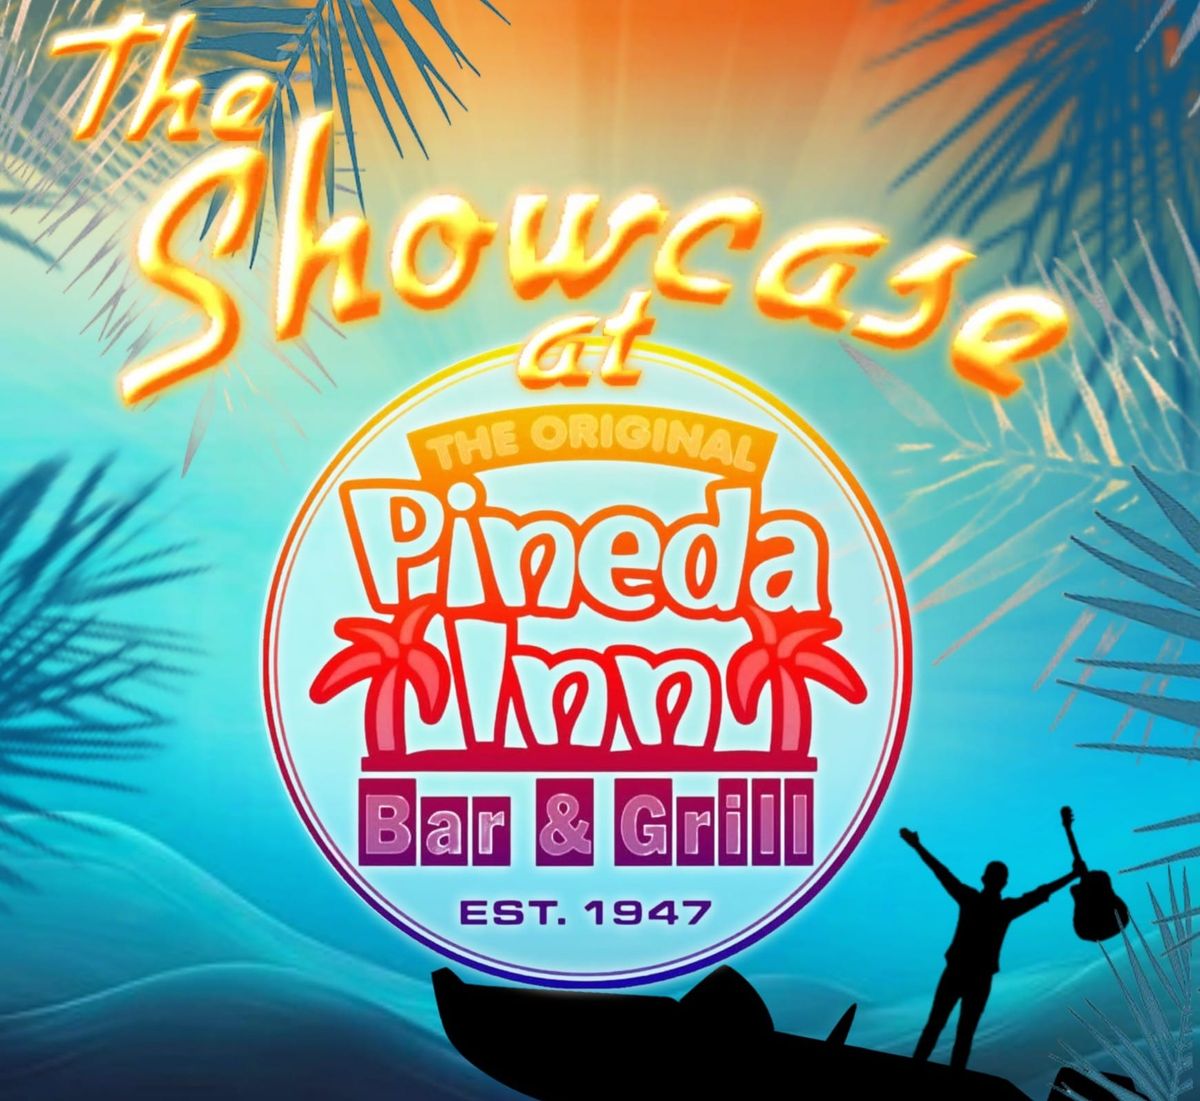 The Showcase at Pineda Inn Rockledge